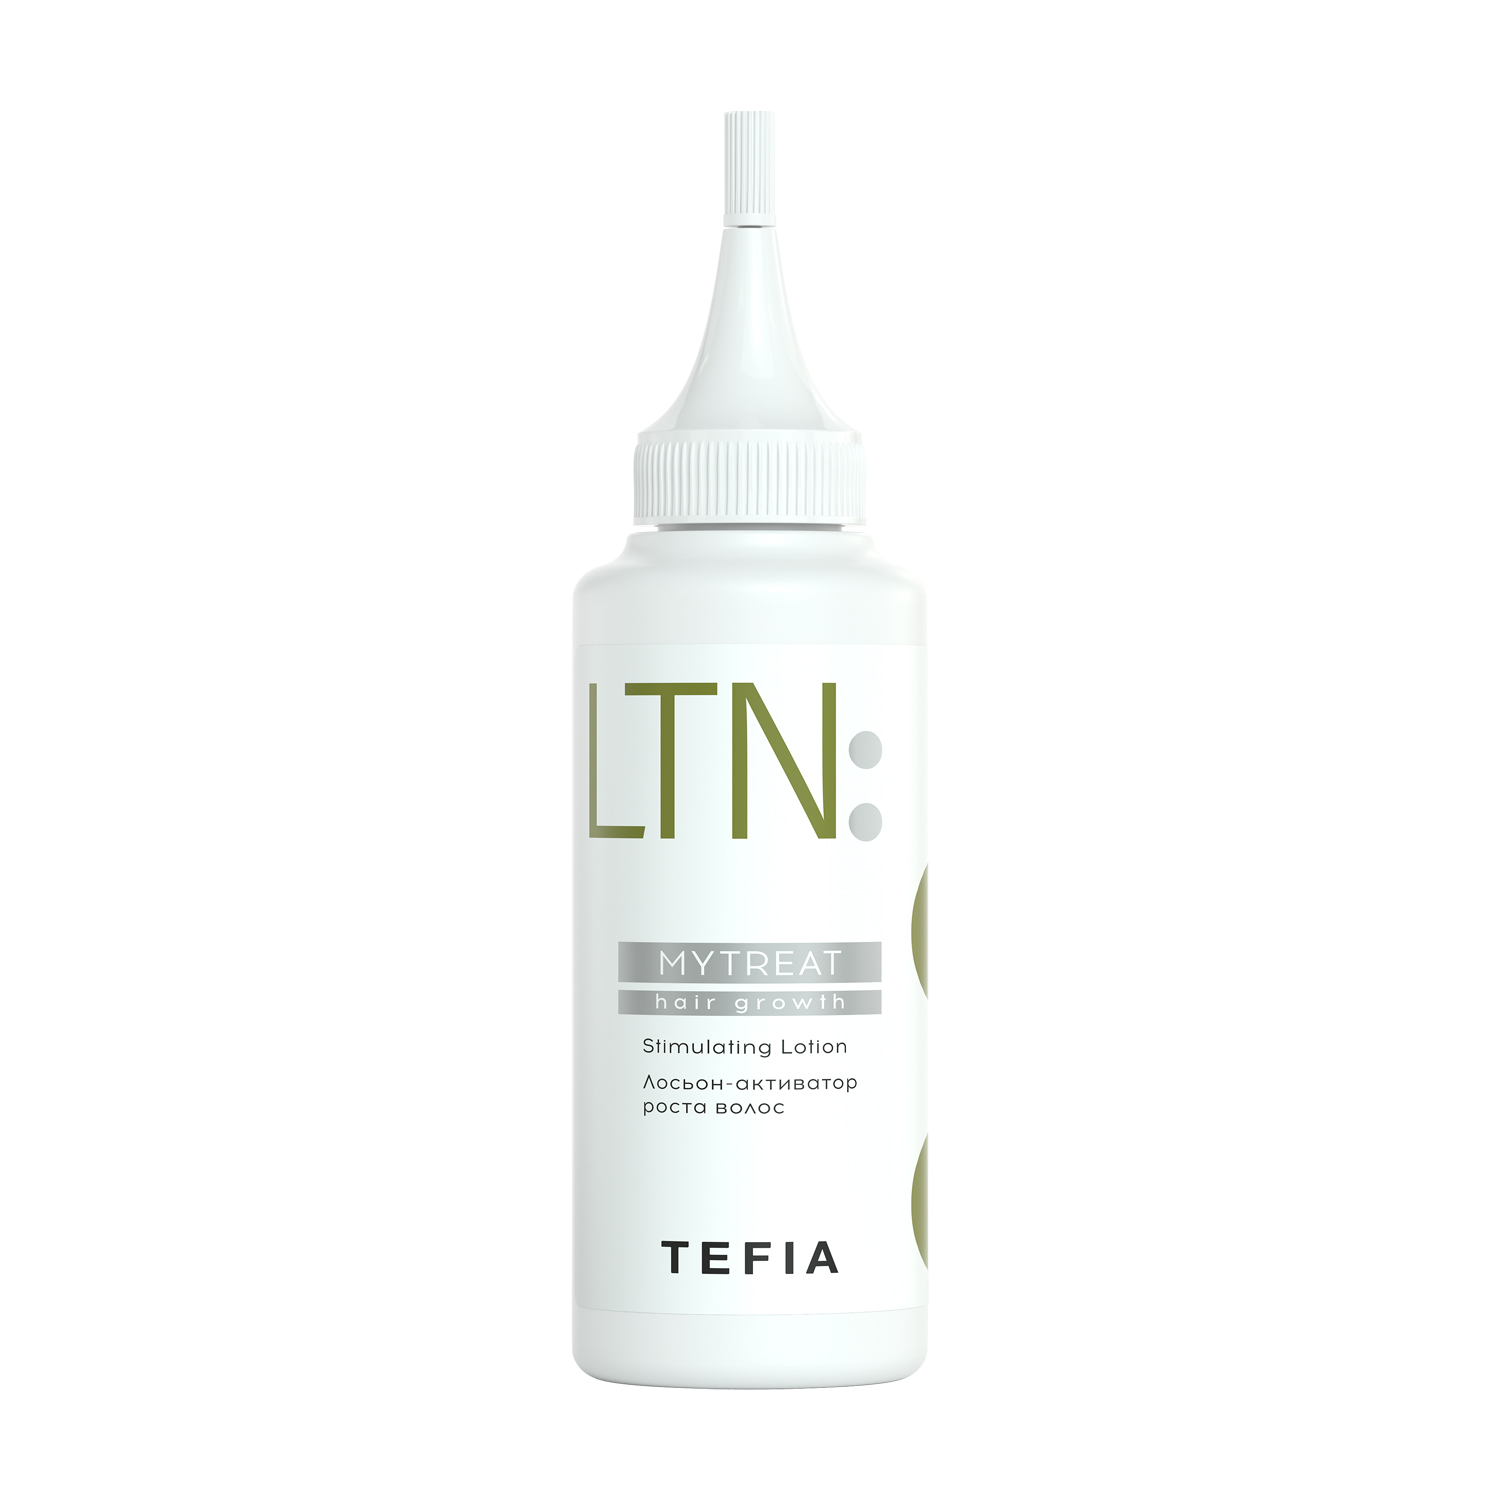 Tefia Лосьон-активатор роста волос, 120 мл (Tefia, MyTreat) tefia mytreat hair growth stimulating lotion лосьон активатор роста волос 120 г 120 мл бутылка